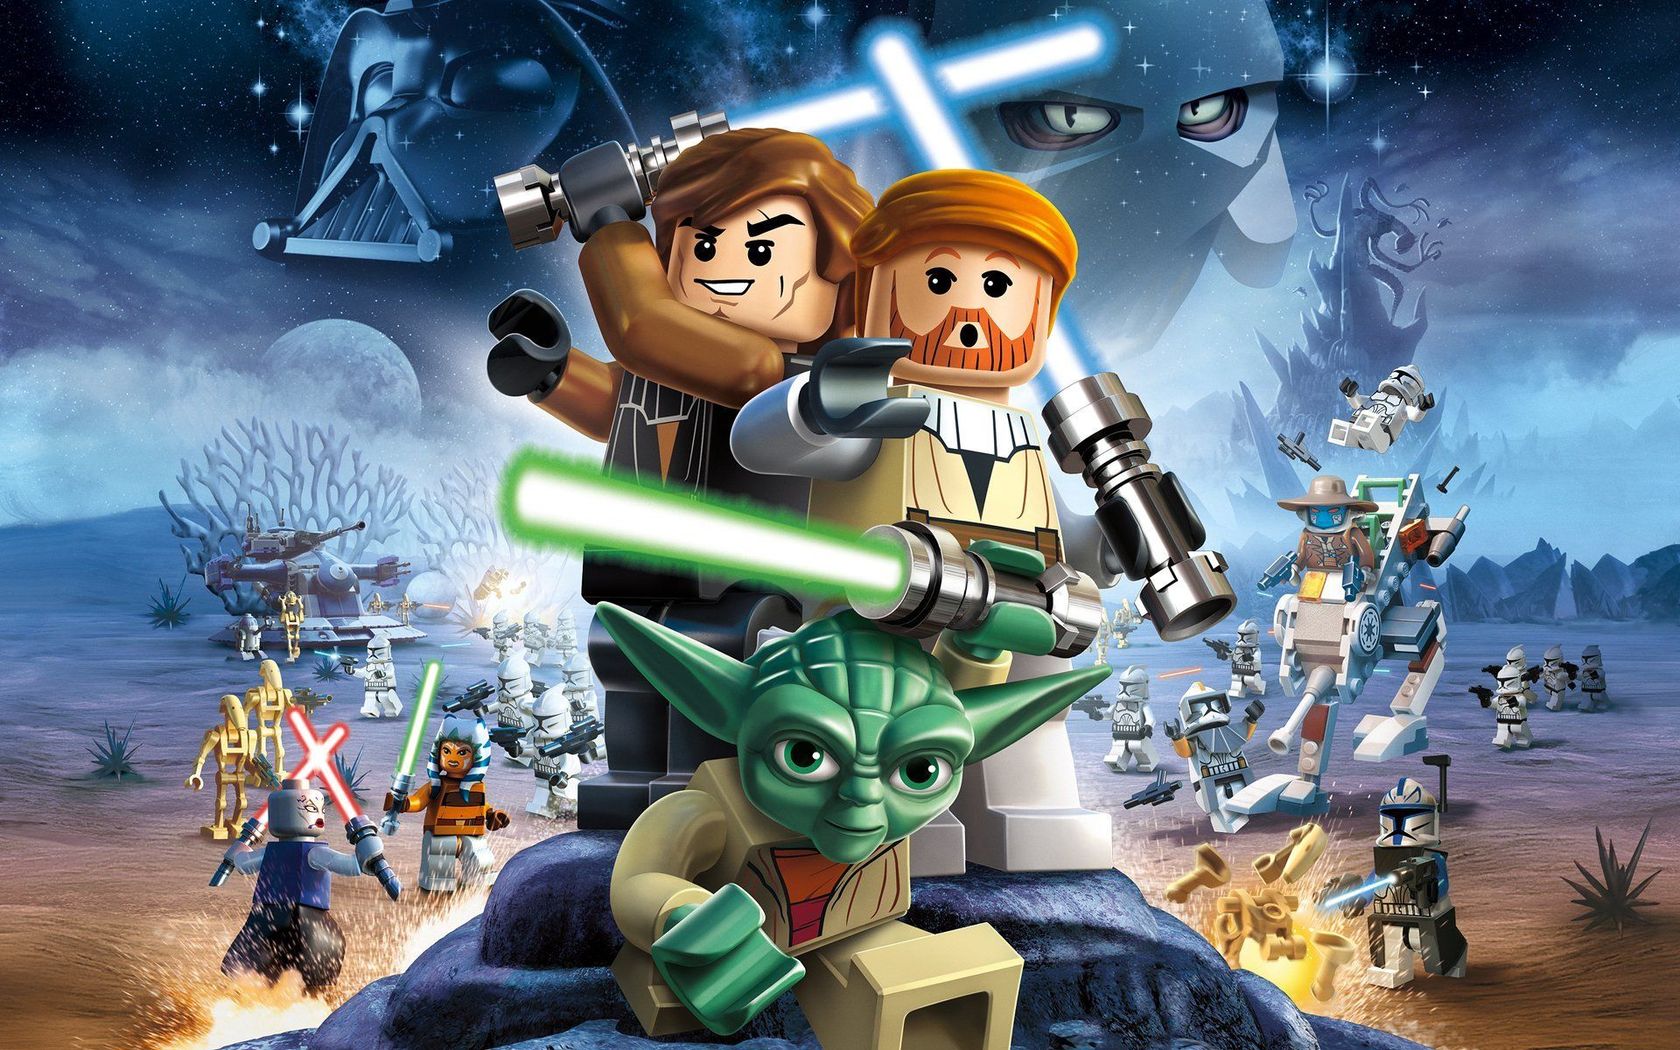 Lego Star Wars wallpaper 17235